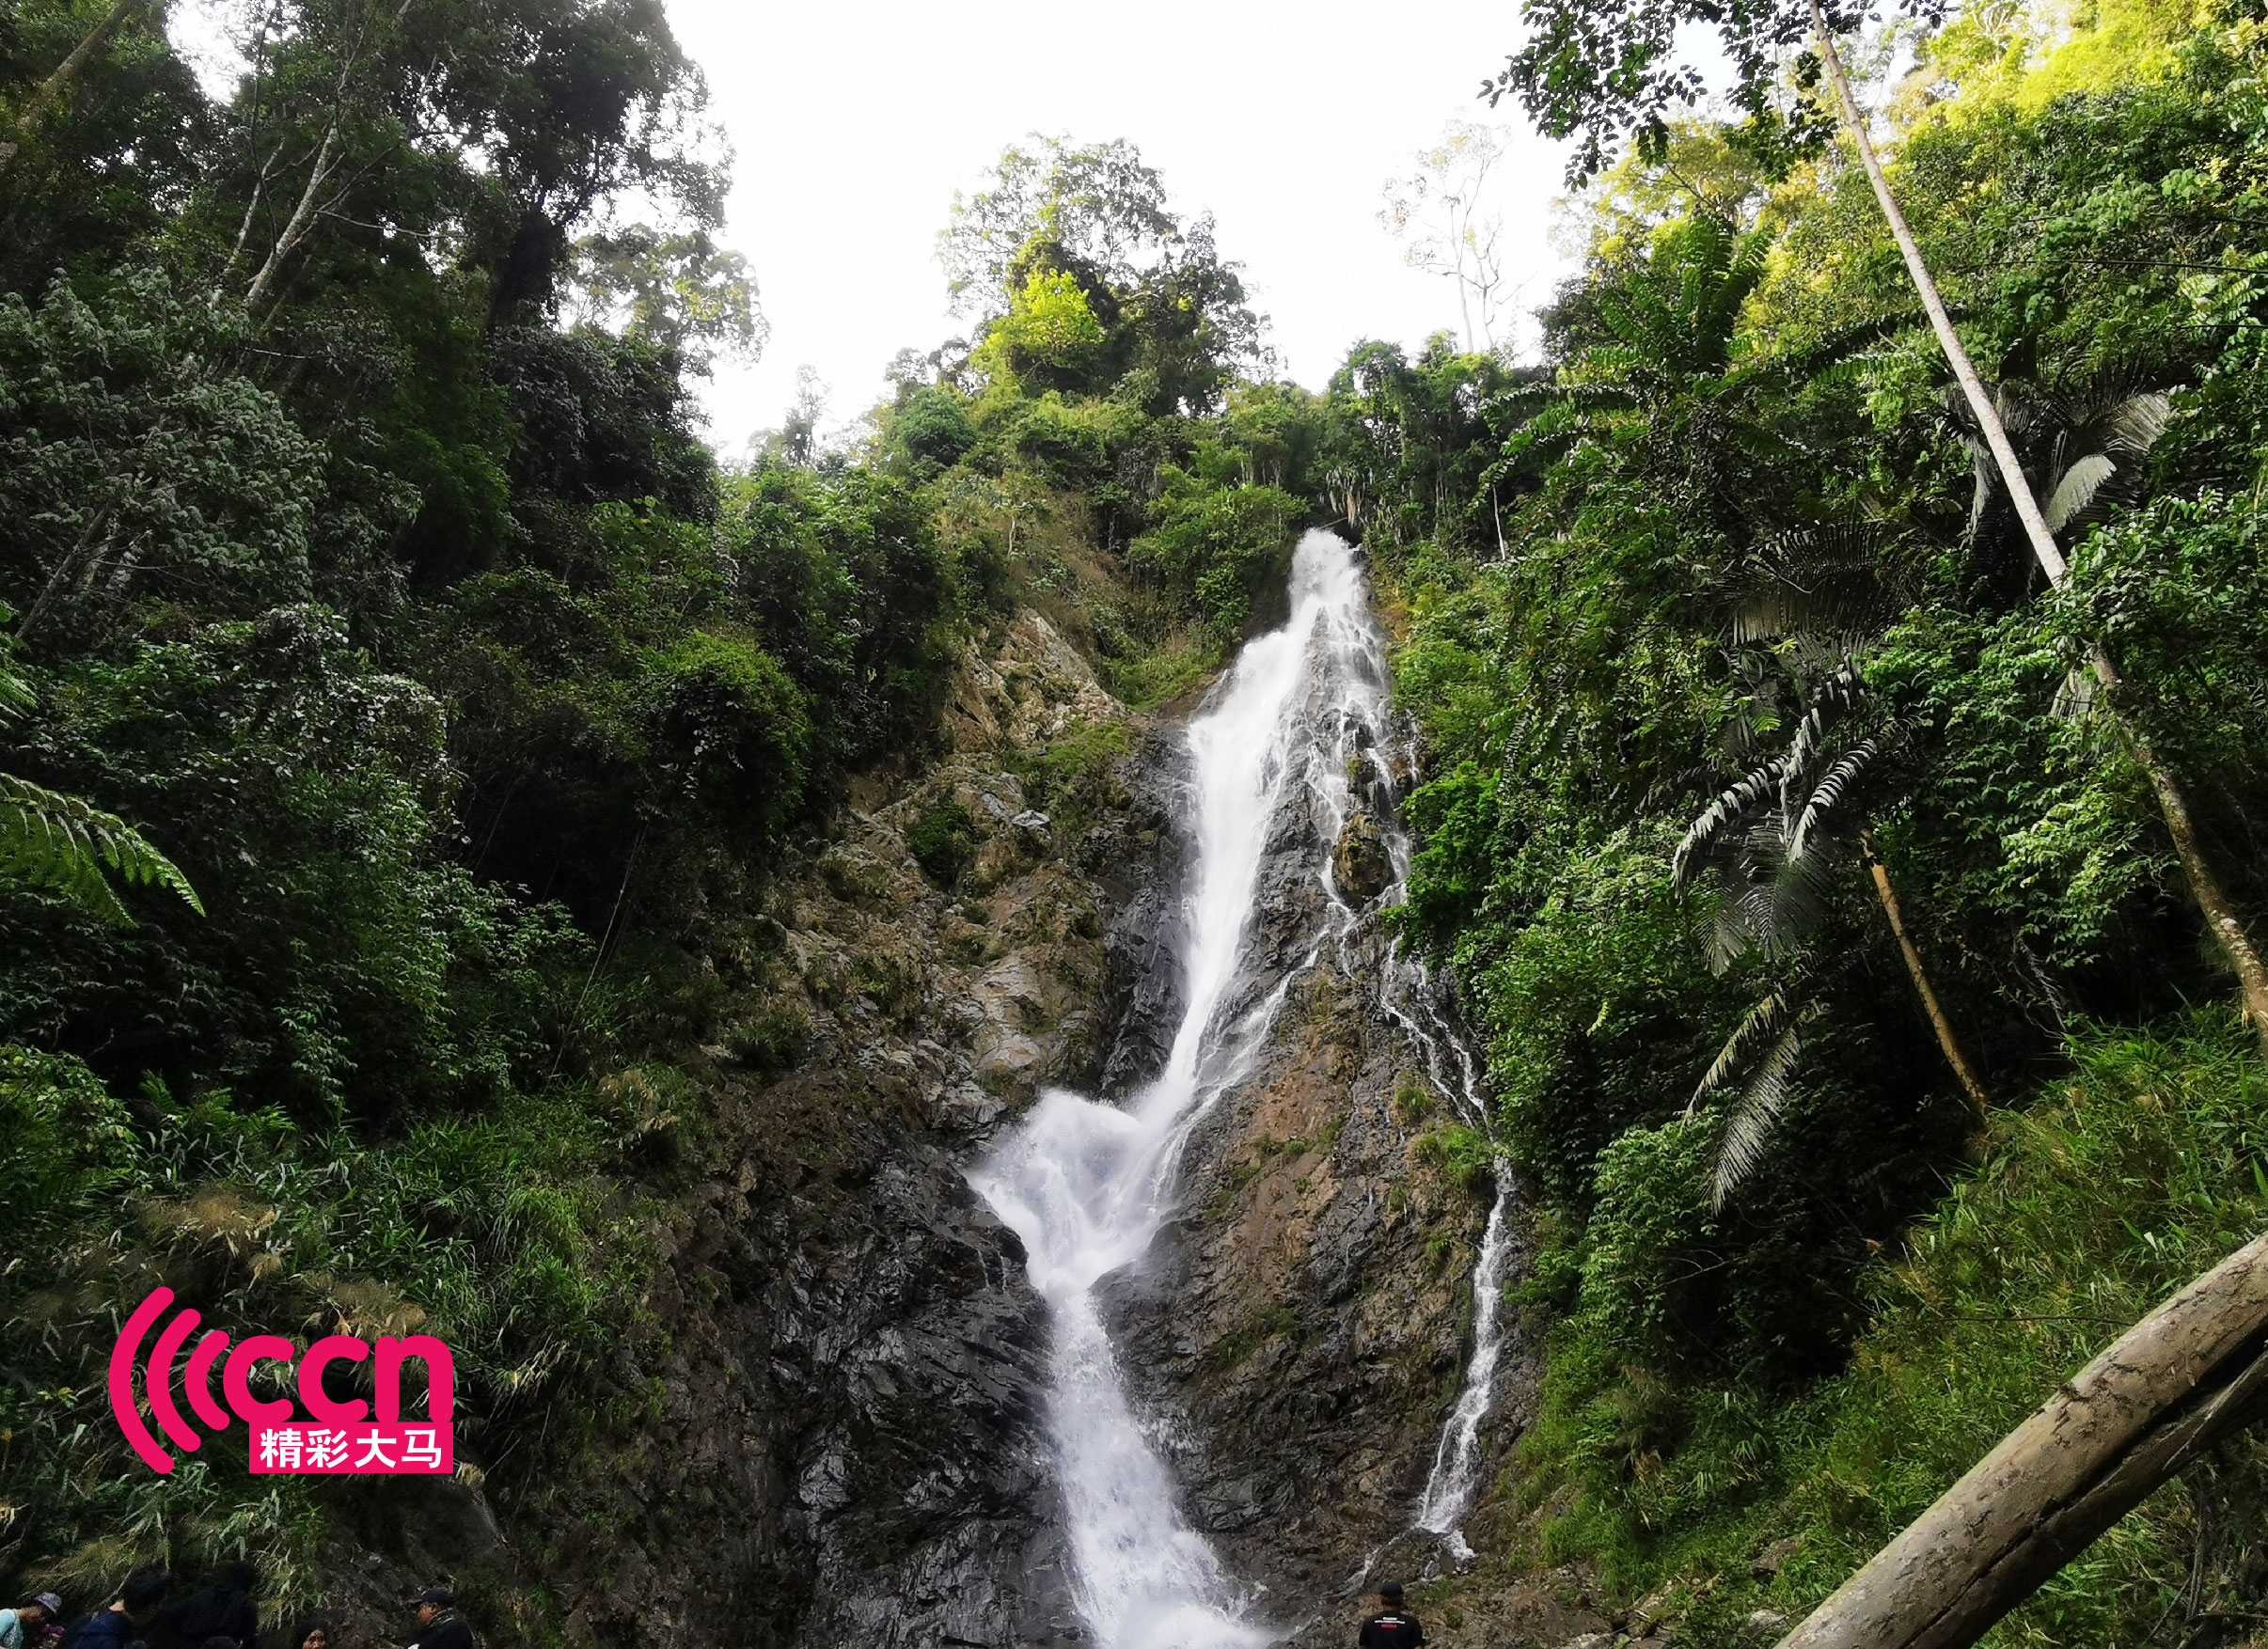 Lata Kijang大瀑布非常壮观，原生态的景观非常适合拍摄Instagram美照。-杨琇媖摄-